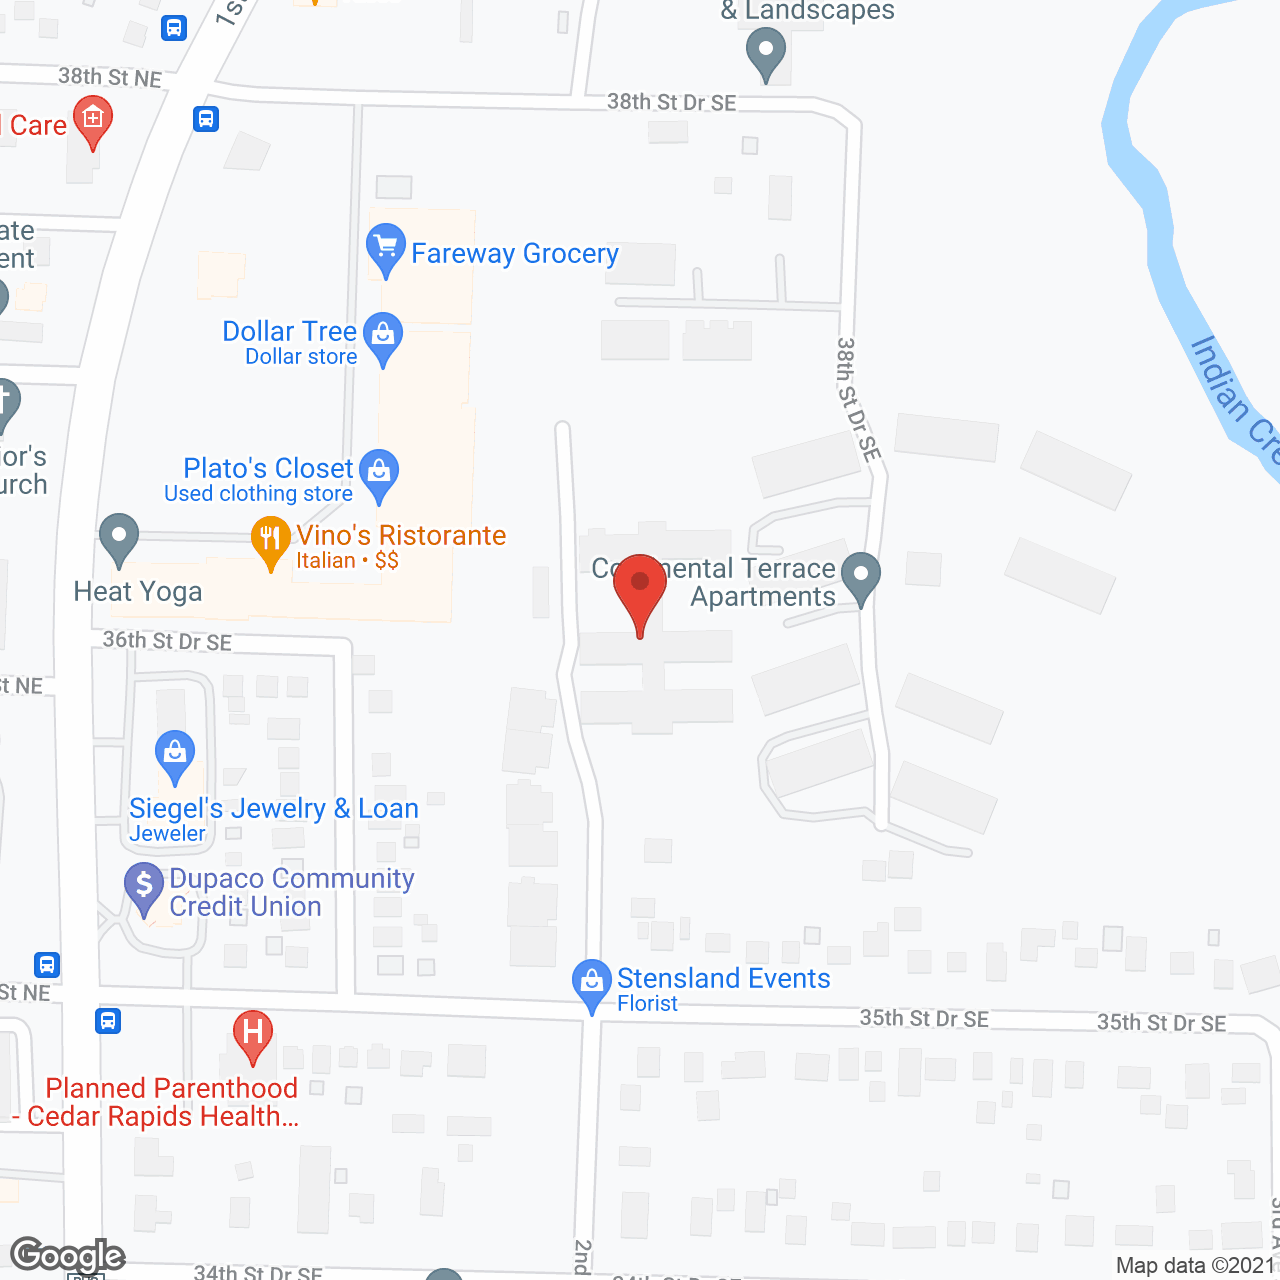 Garnett Place in google map